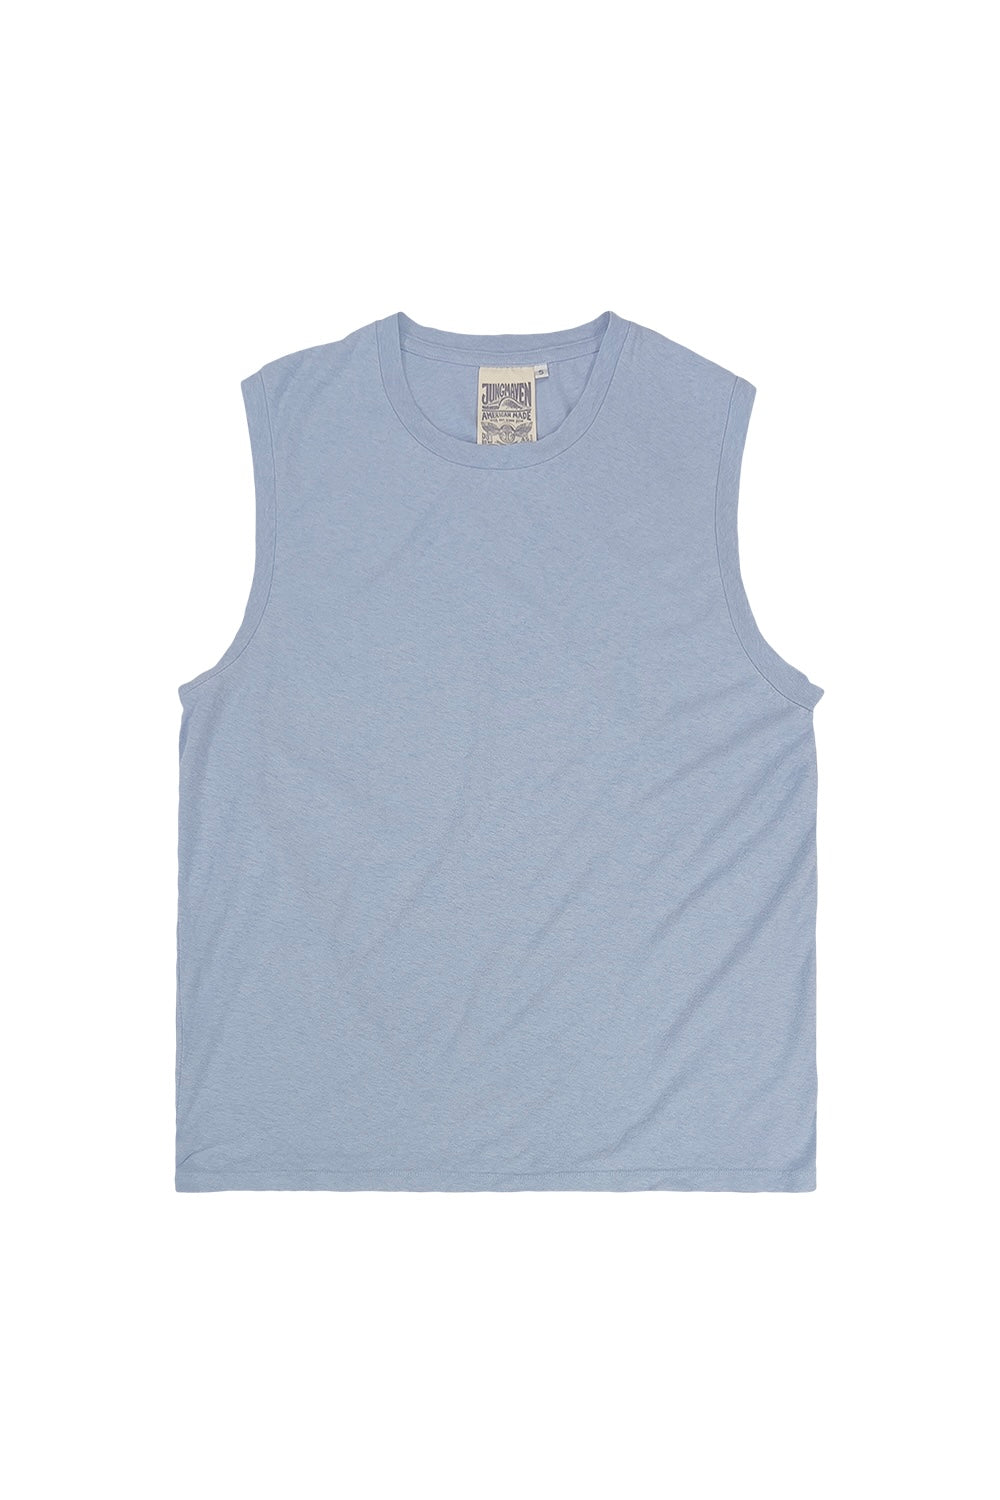 Malibu Muscle Tee | Jungmaven Hemp Clothing & Accessories / Color: Coastal Blue